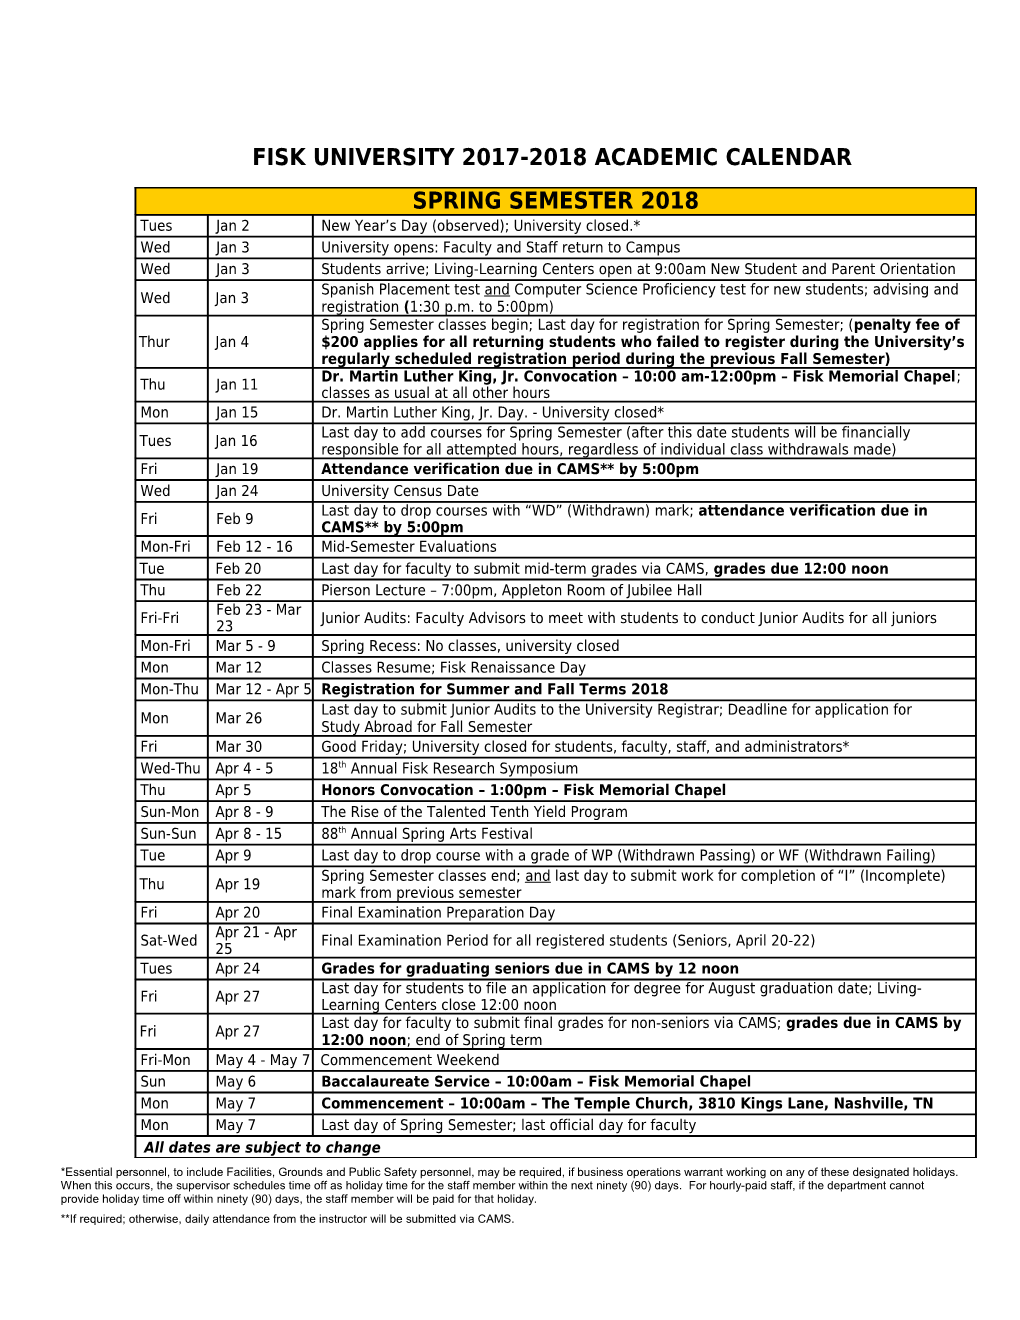 Fisk University 2017-2018 Academic Calendar